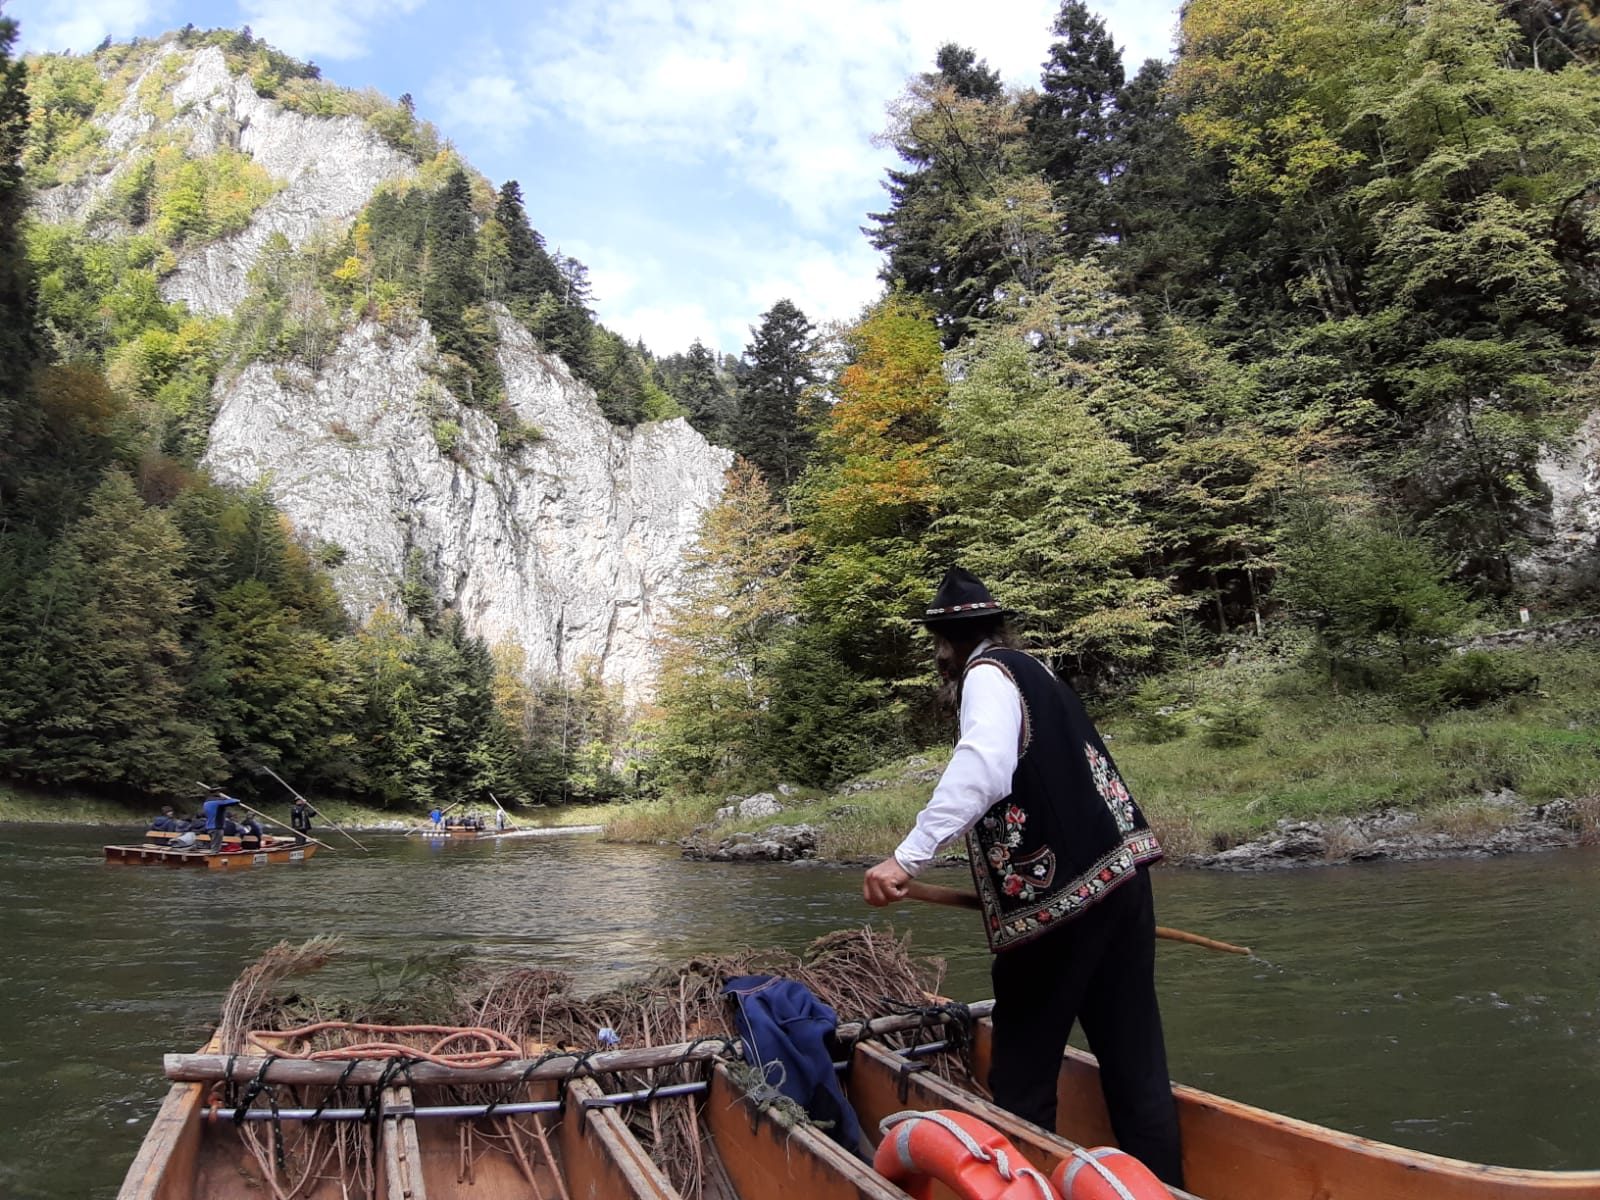 A Slovak man guides the canoe through the Dunajec River.